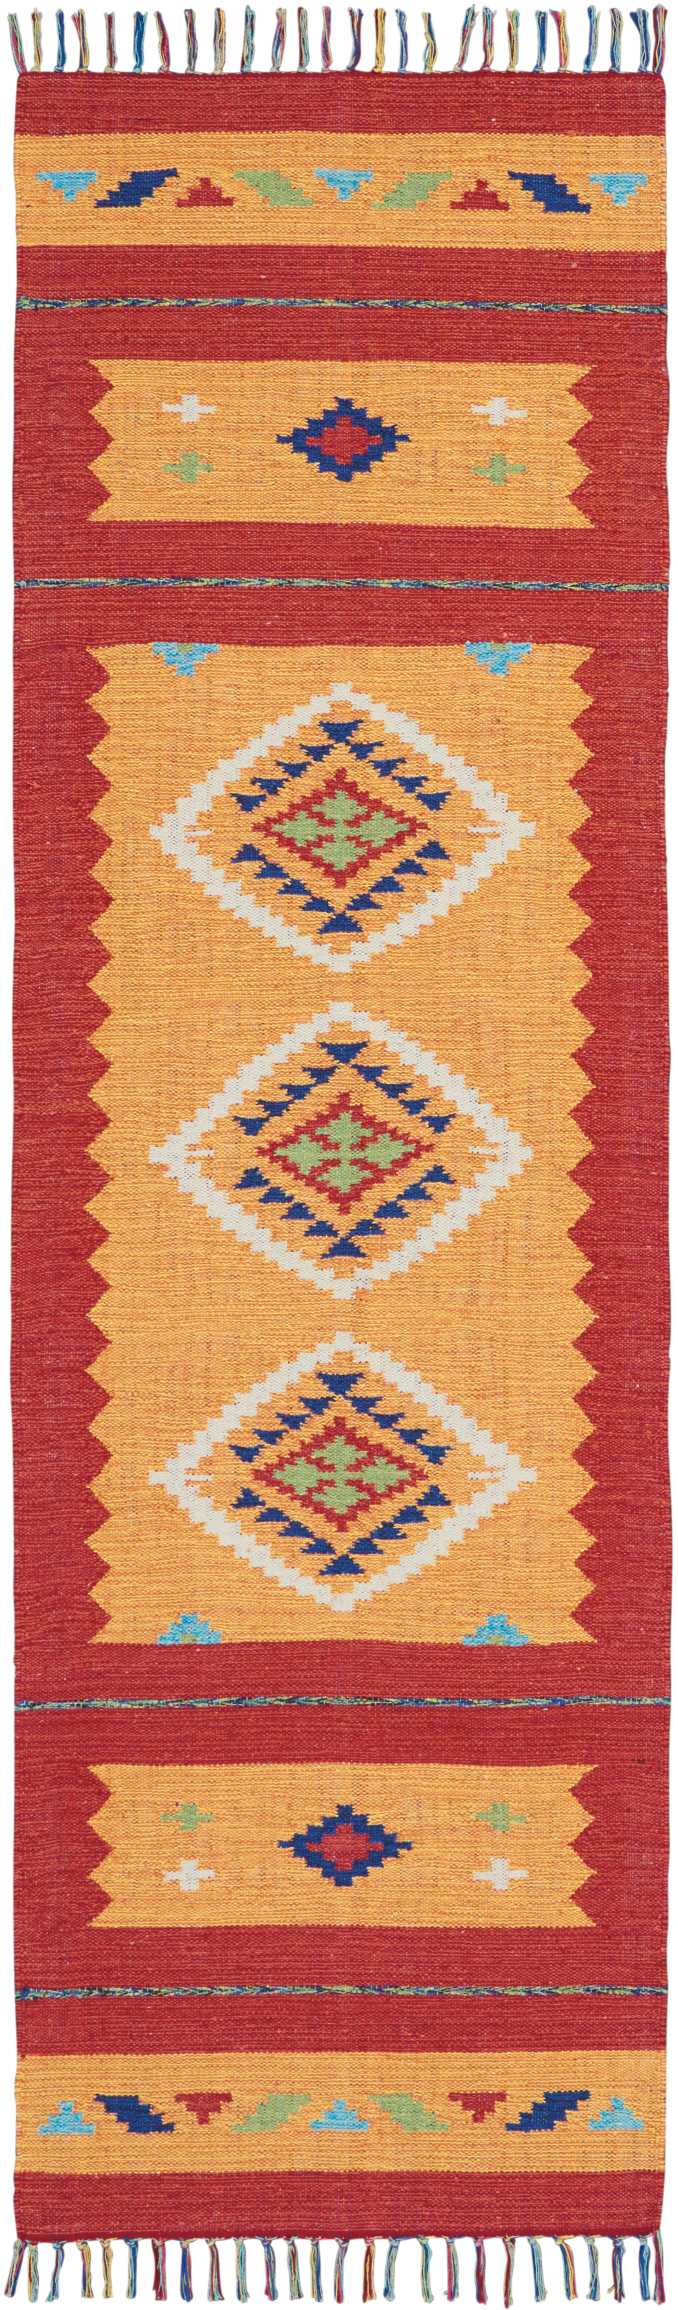 baja handmade orange red rug by nourison 99446395559 redo 2